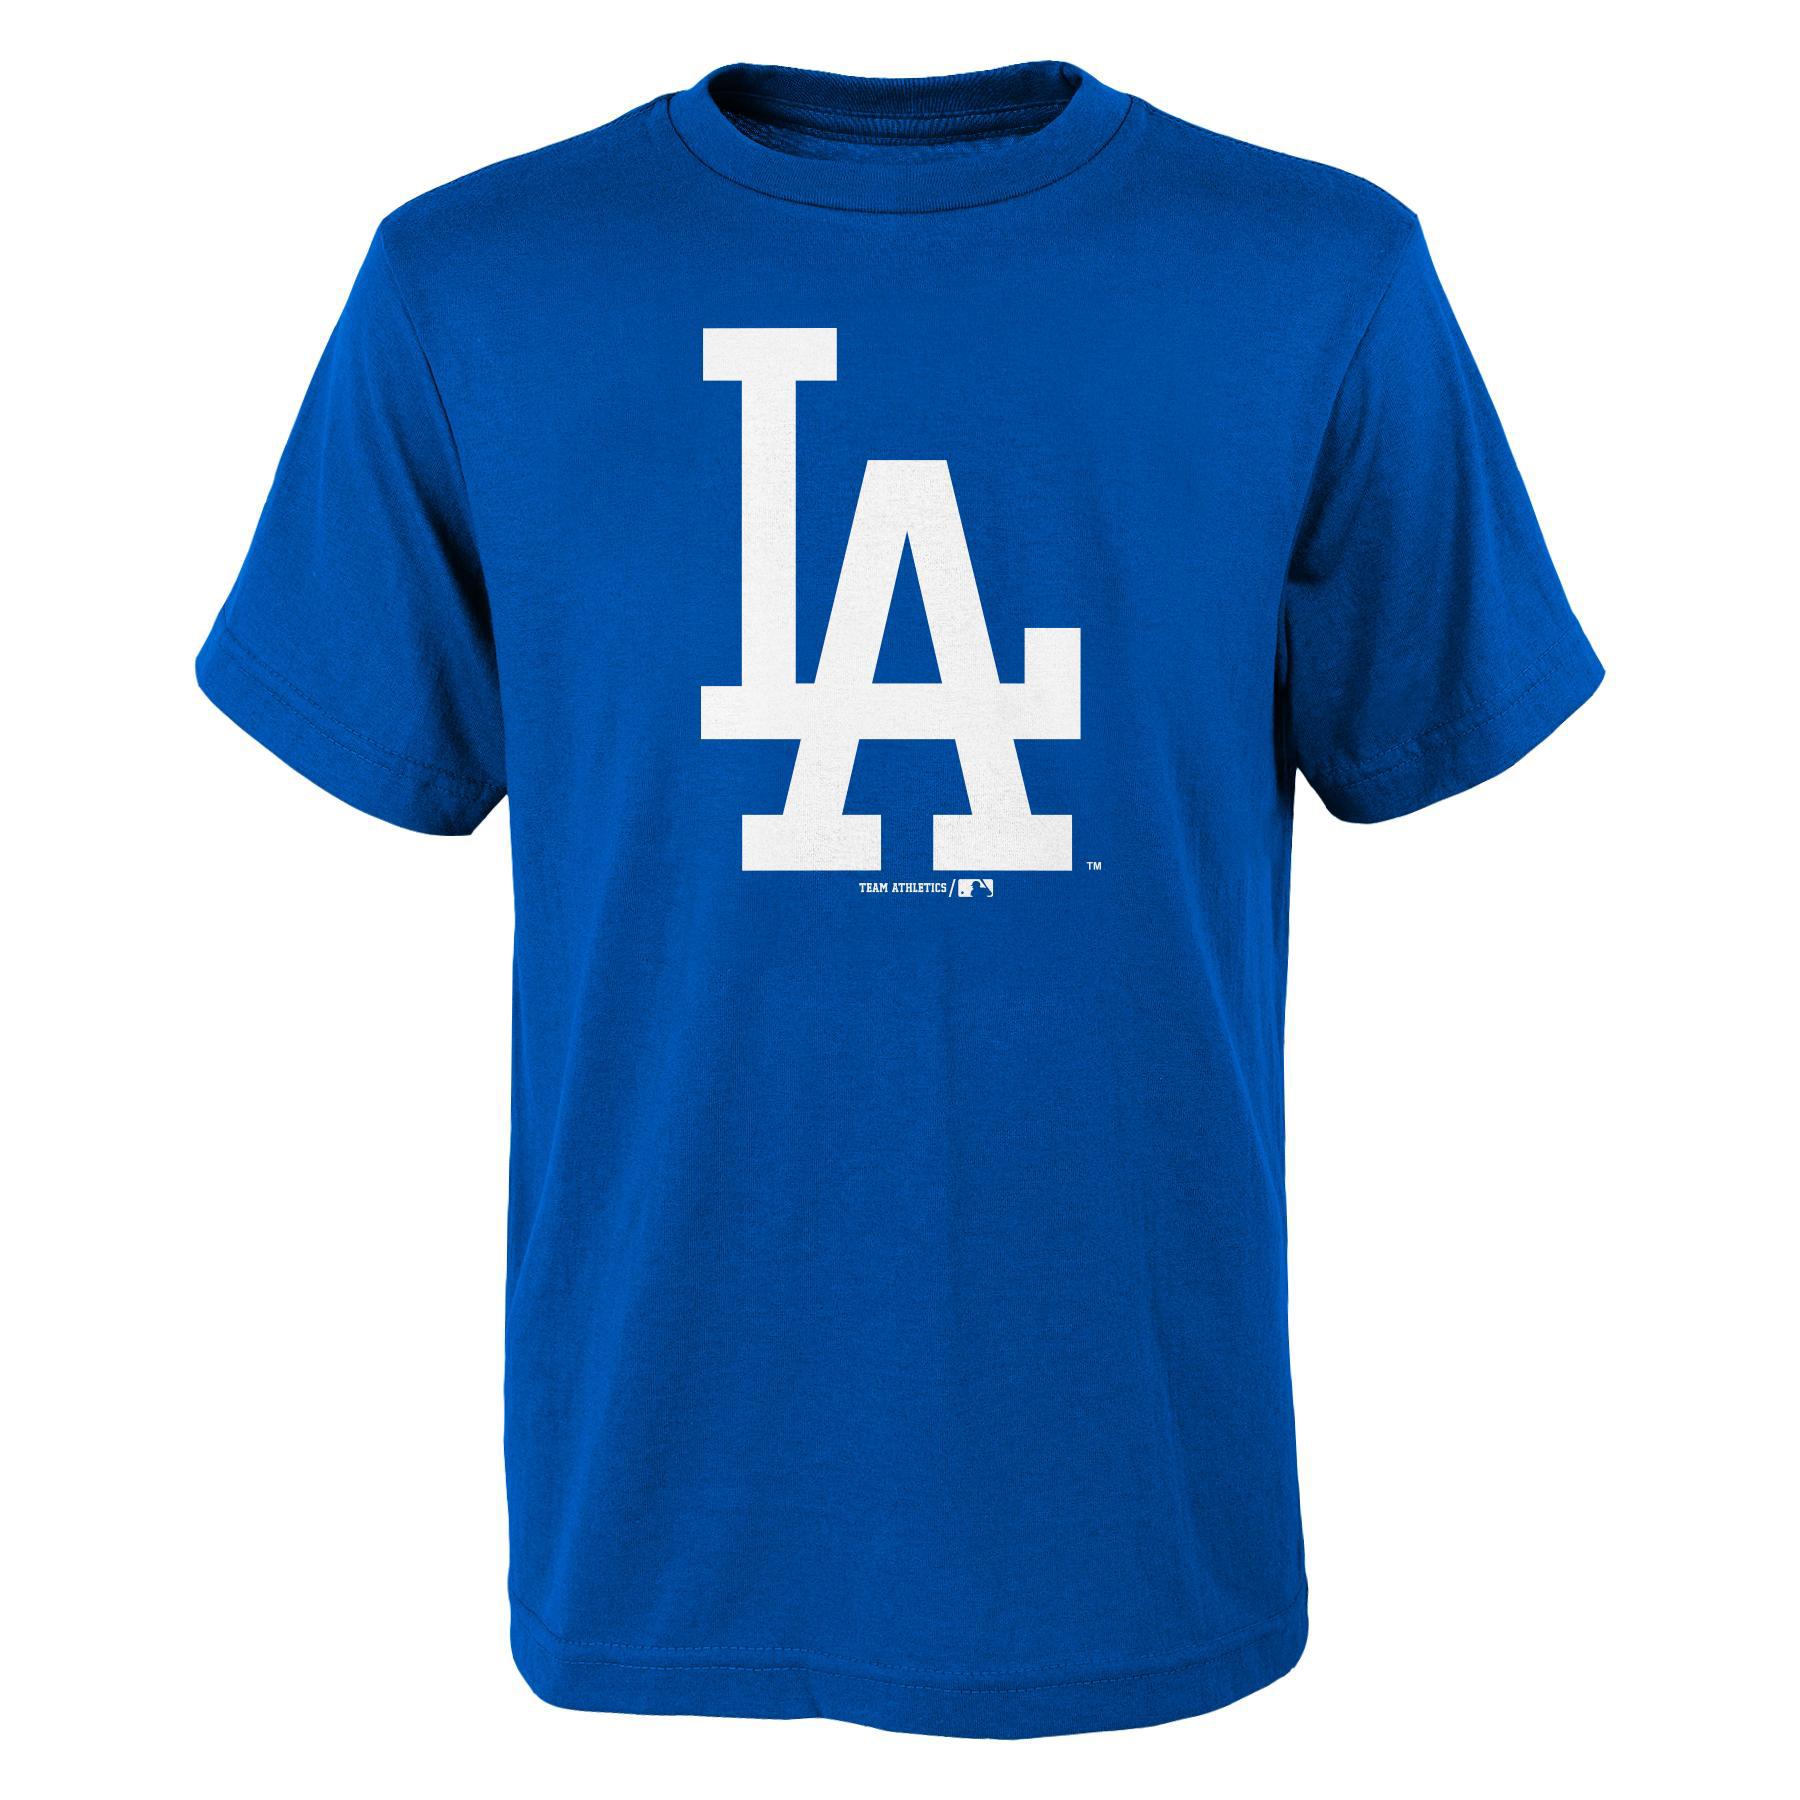 MLB Boy's Graphic T-Shirt - Los Angeles Dodgers